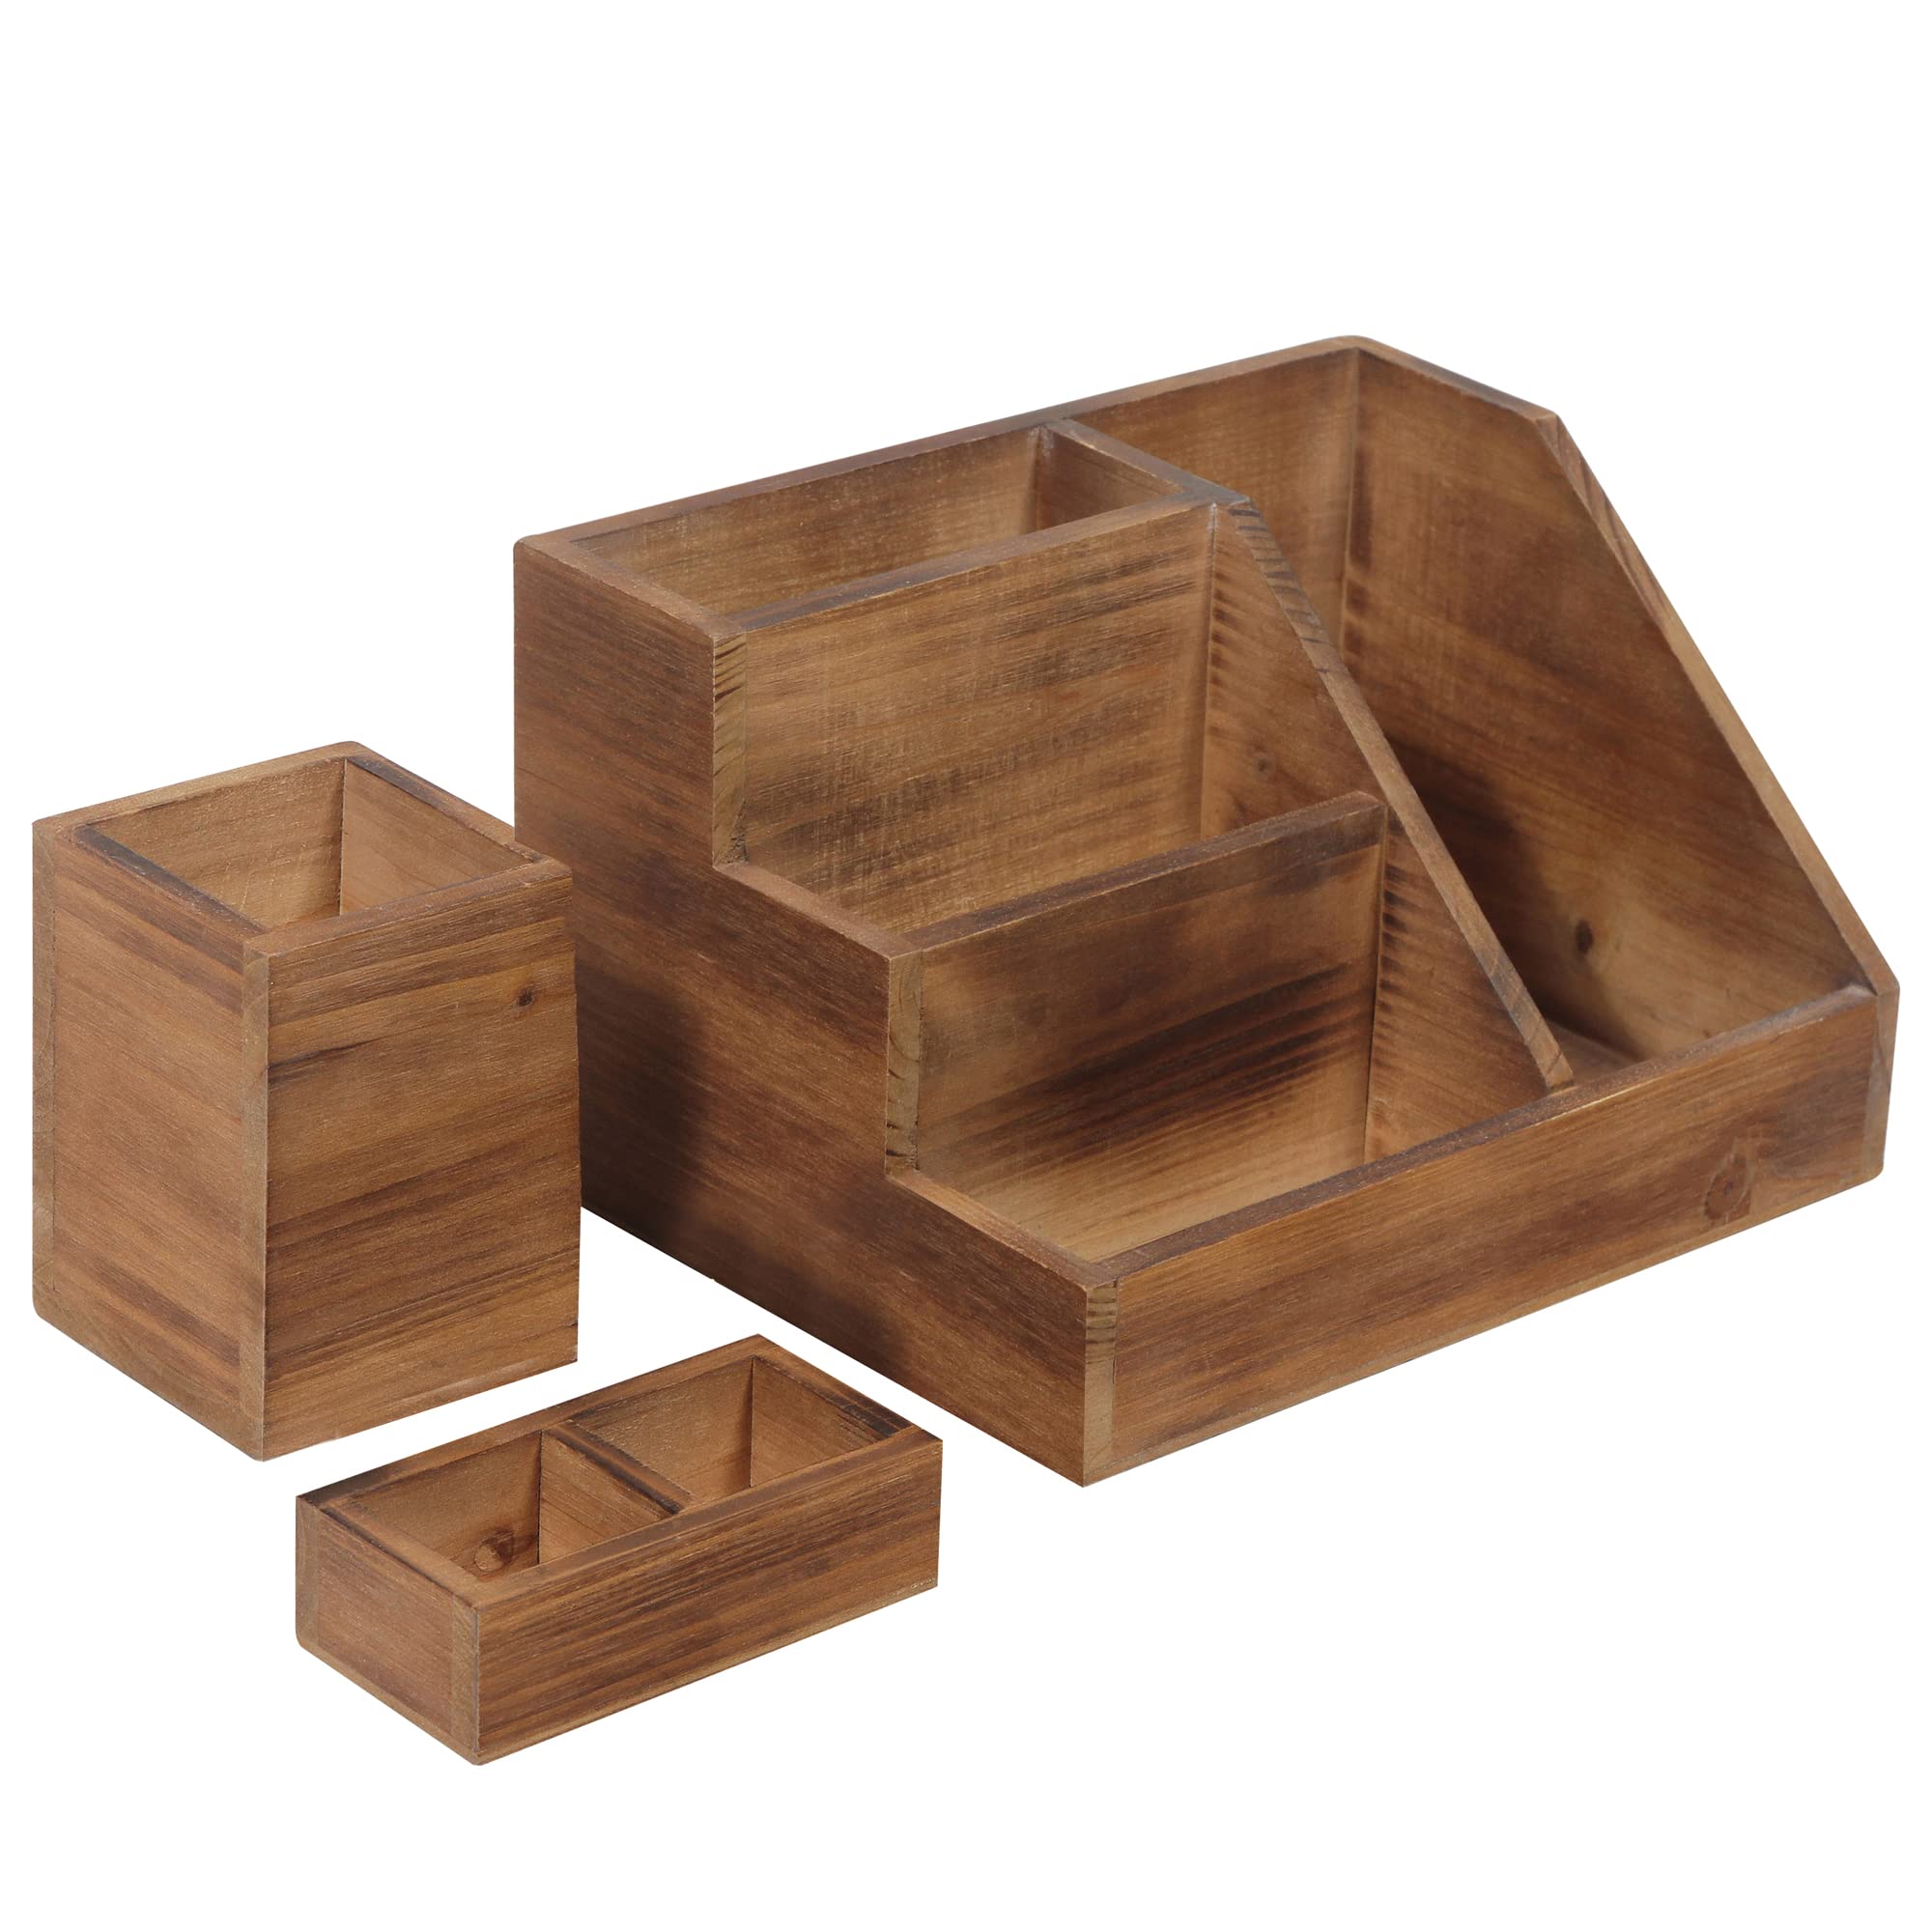 Shangrun 3 Piece Rustic Wooden Desk Organizer Set